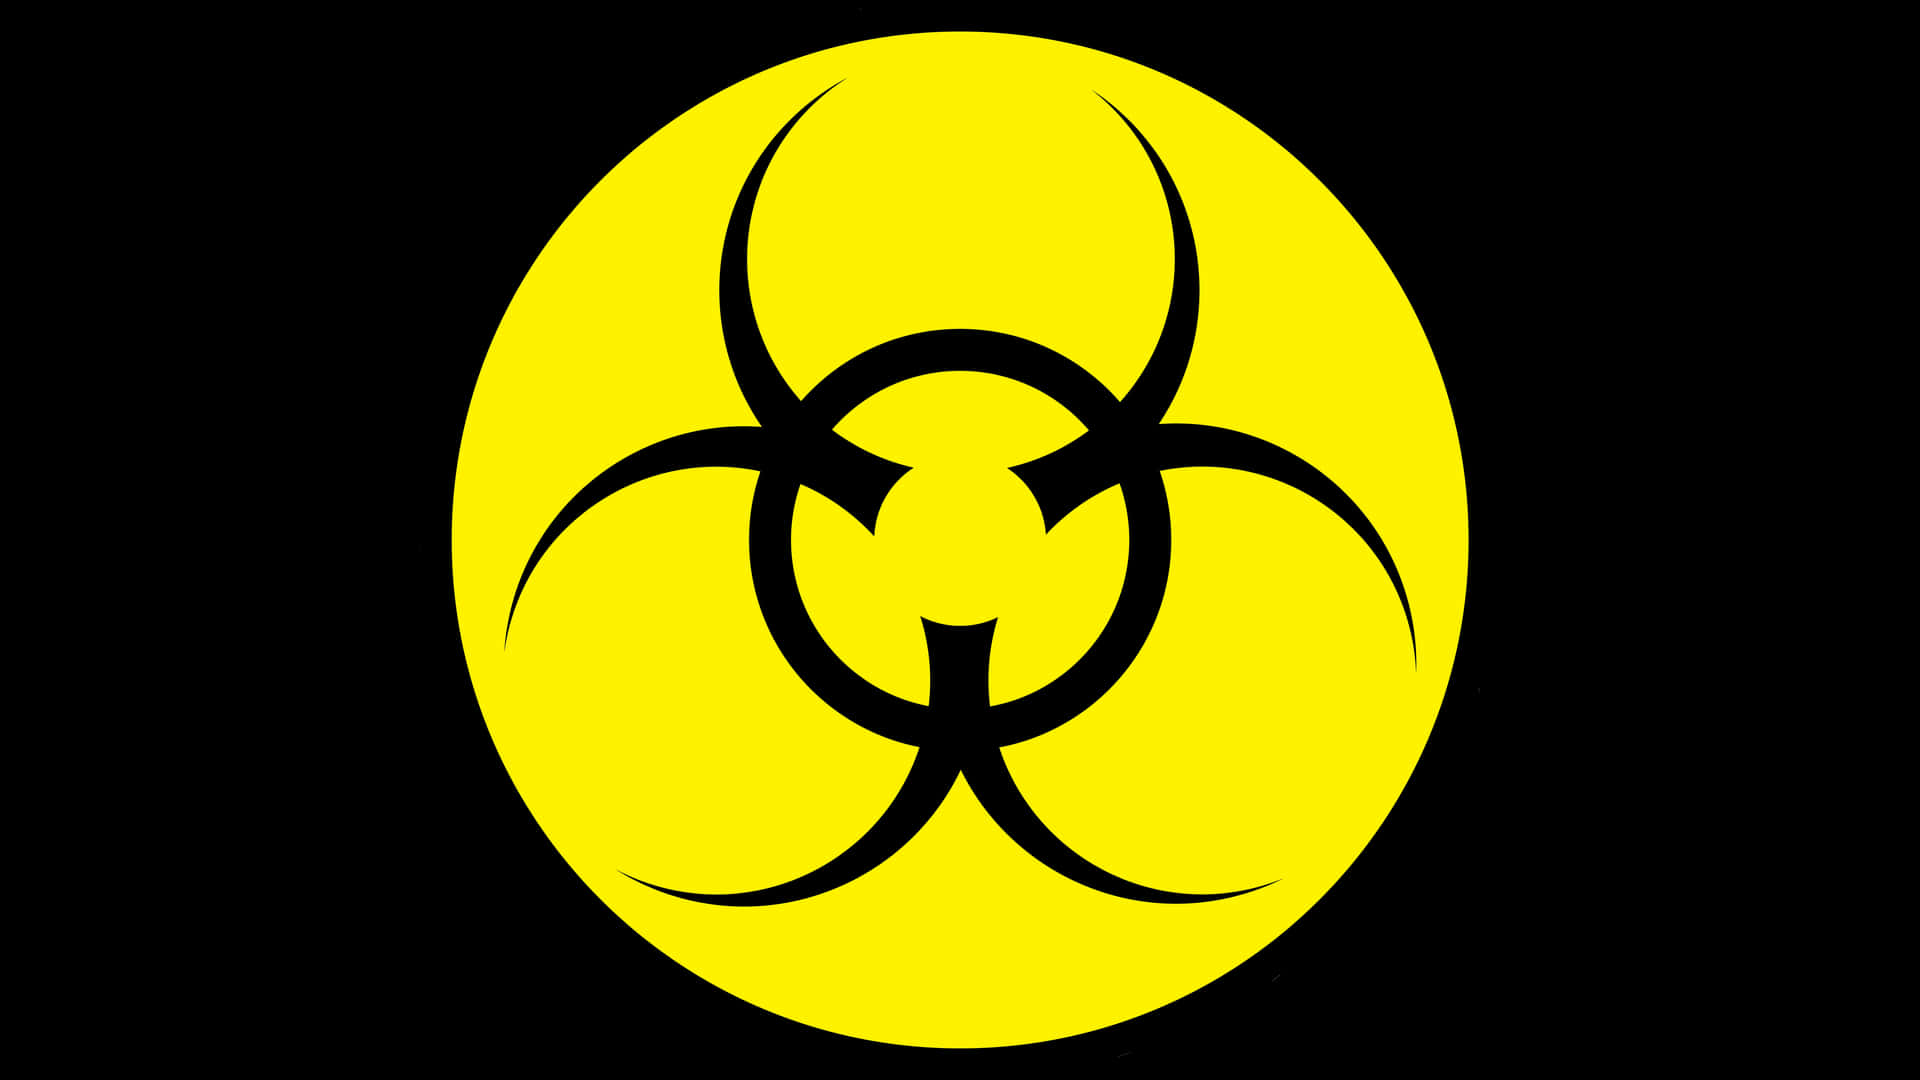 Biohazard Symbol Yellow And Black Wallpaper